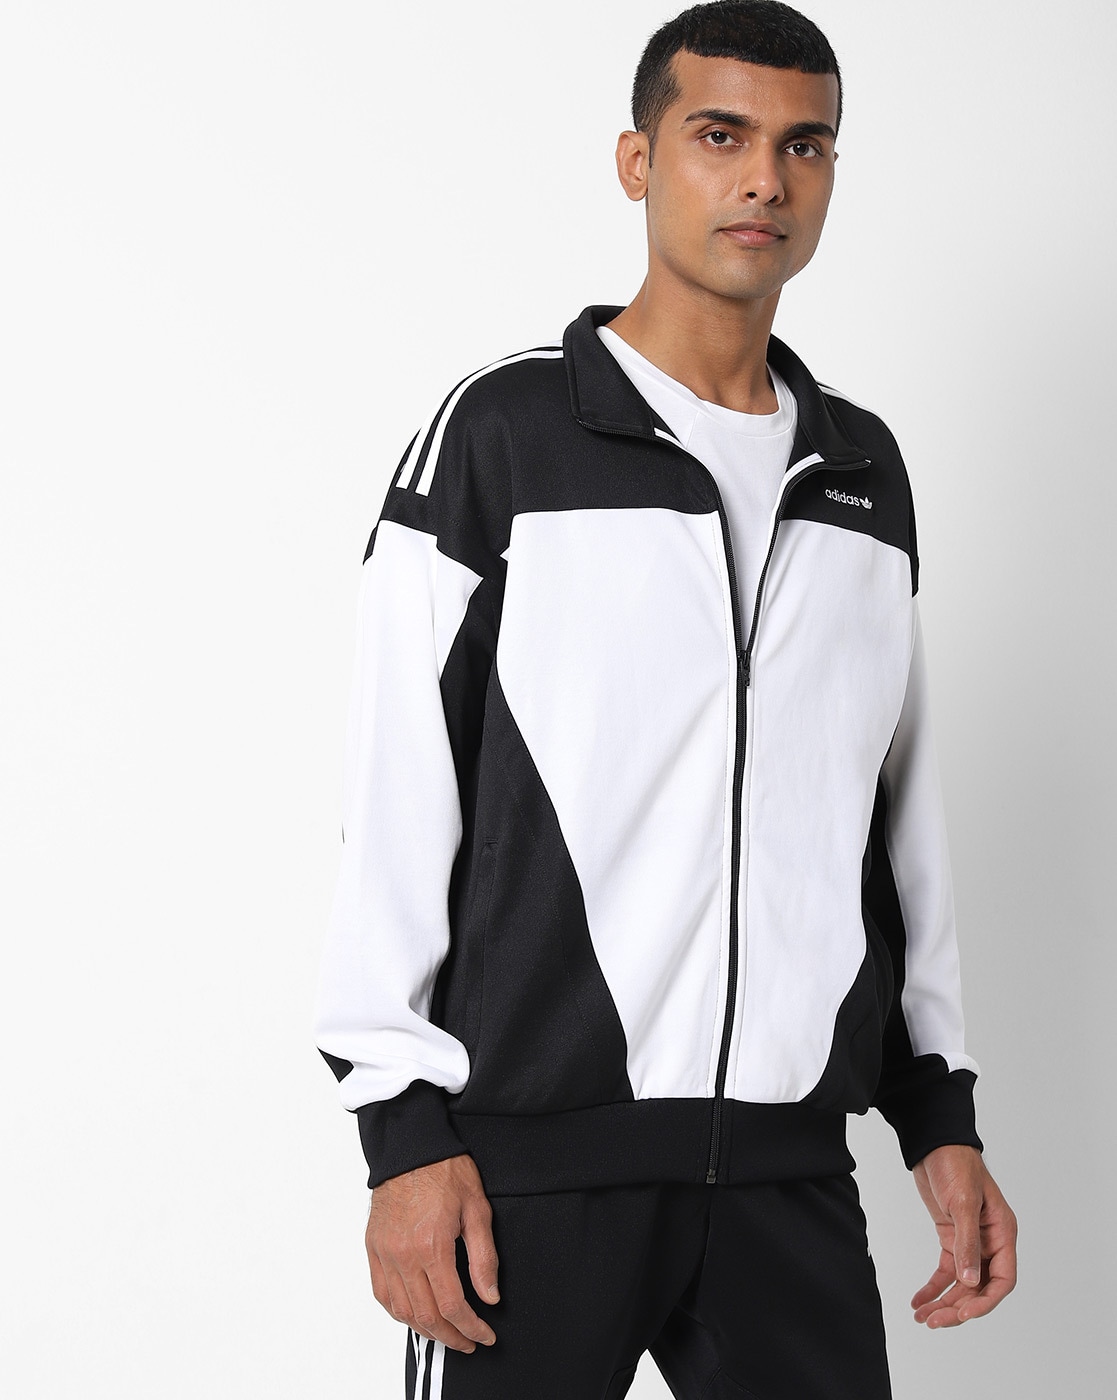 Buy Black & White & for Men by Adidas Originals Online |